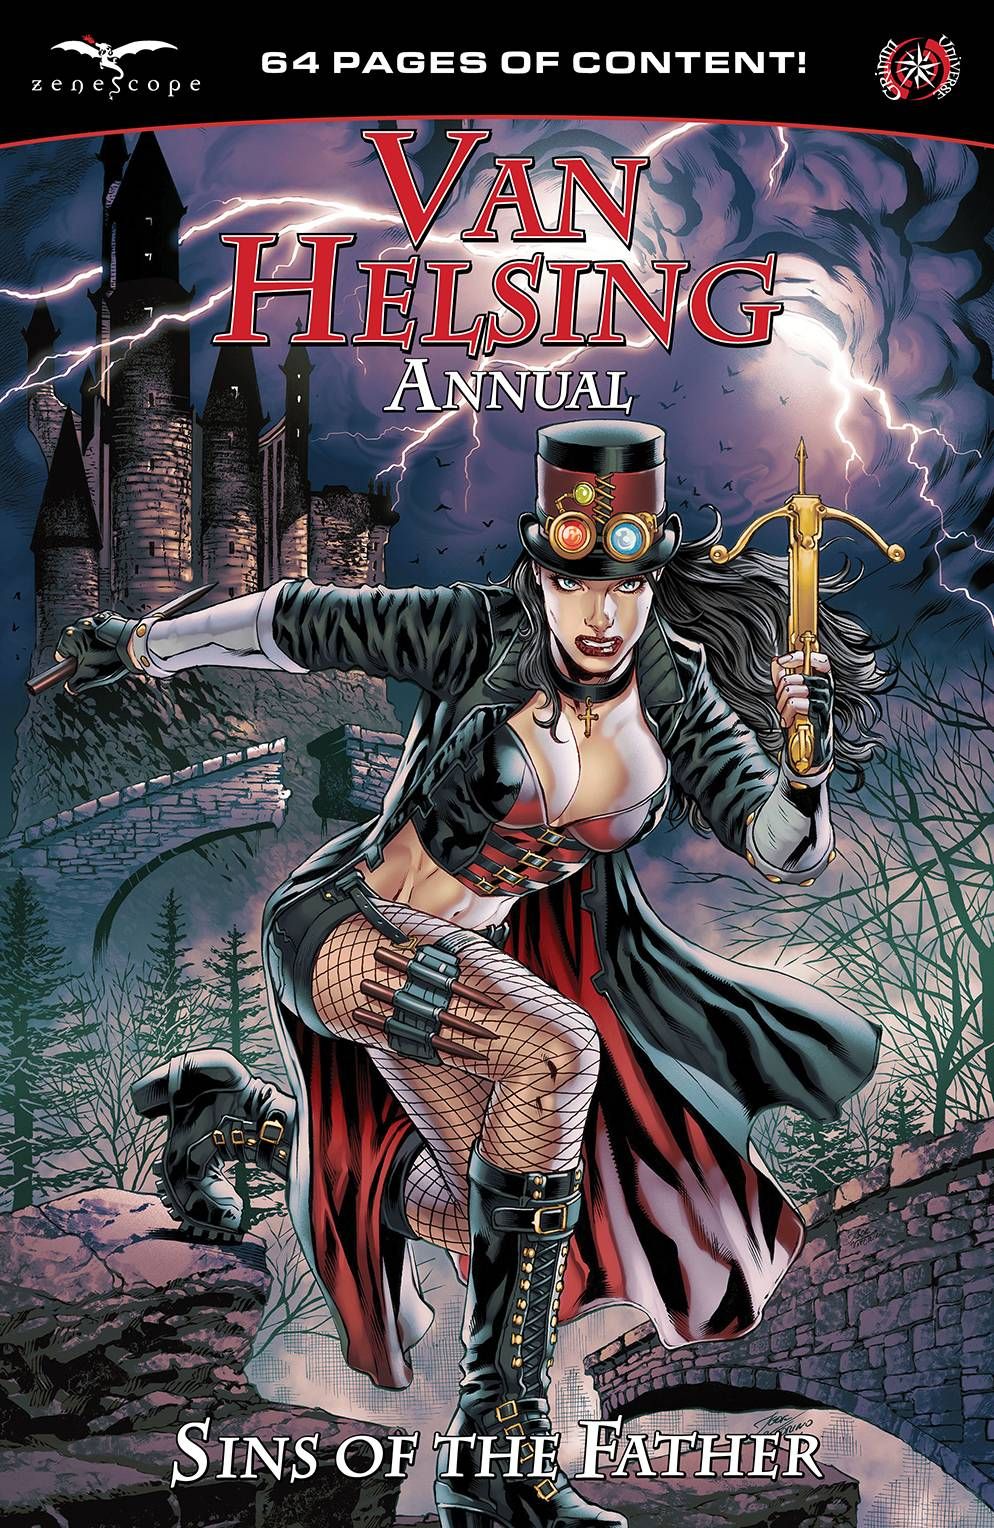 Van Helsing Annual: Sins of the Father #nn Comic